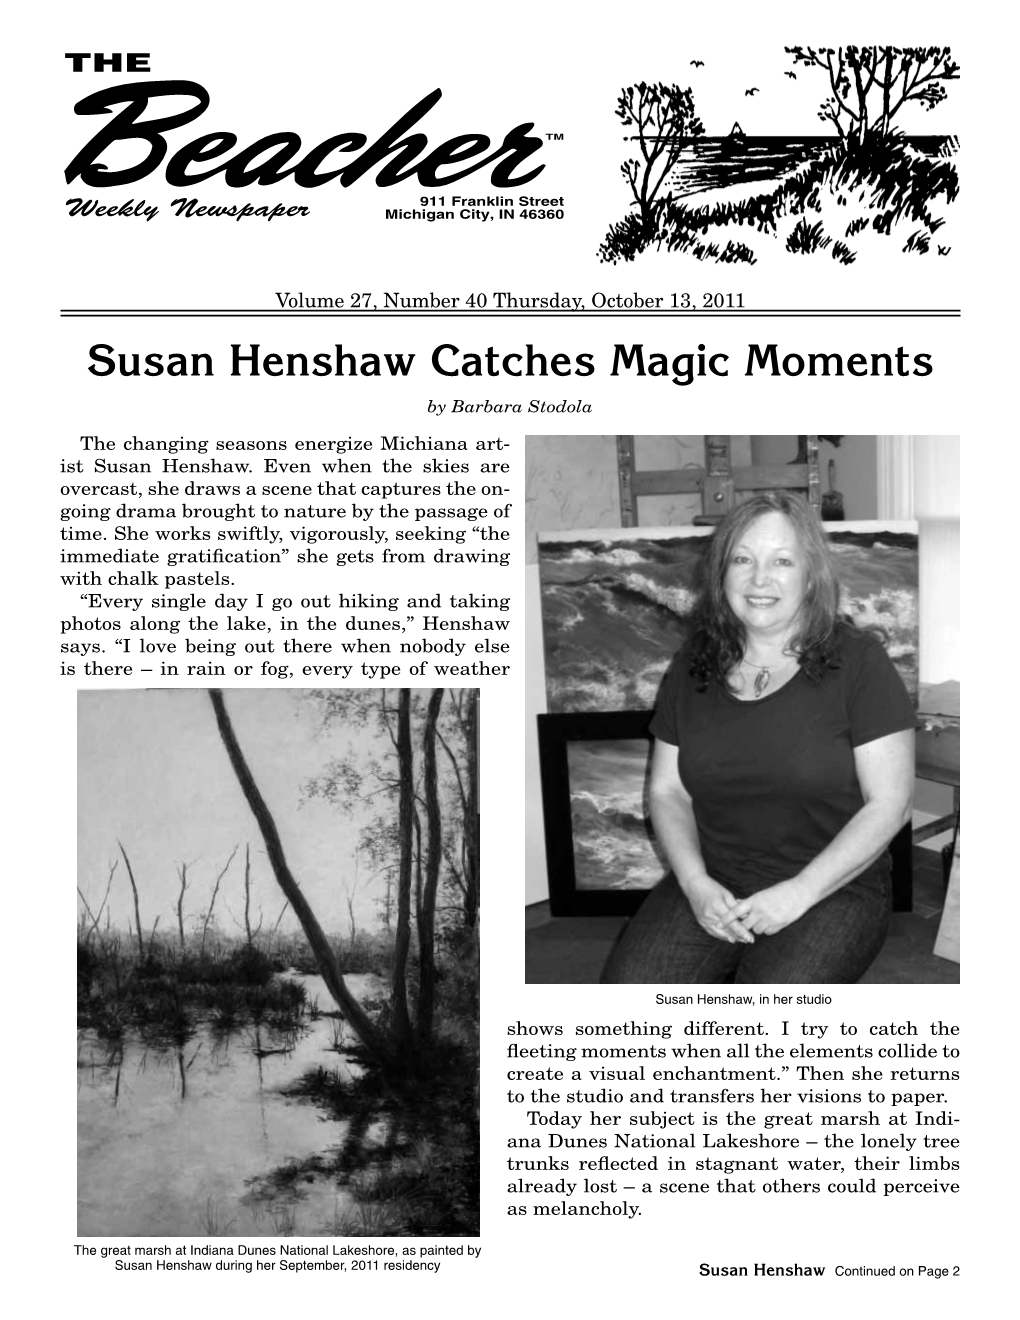 Susan Henshaw Catches Magic Moments by Barbara Stodola